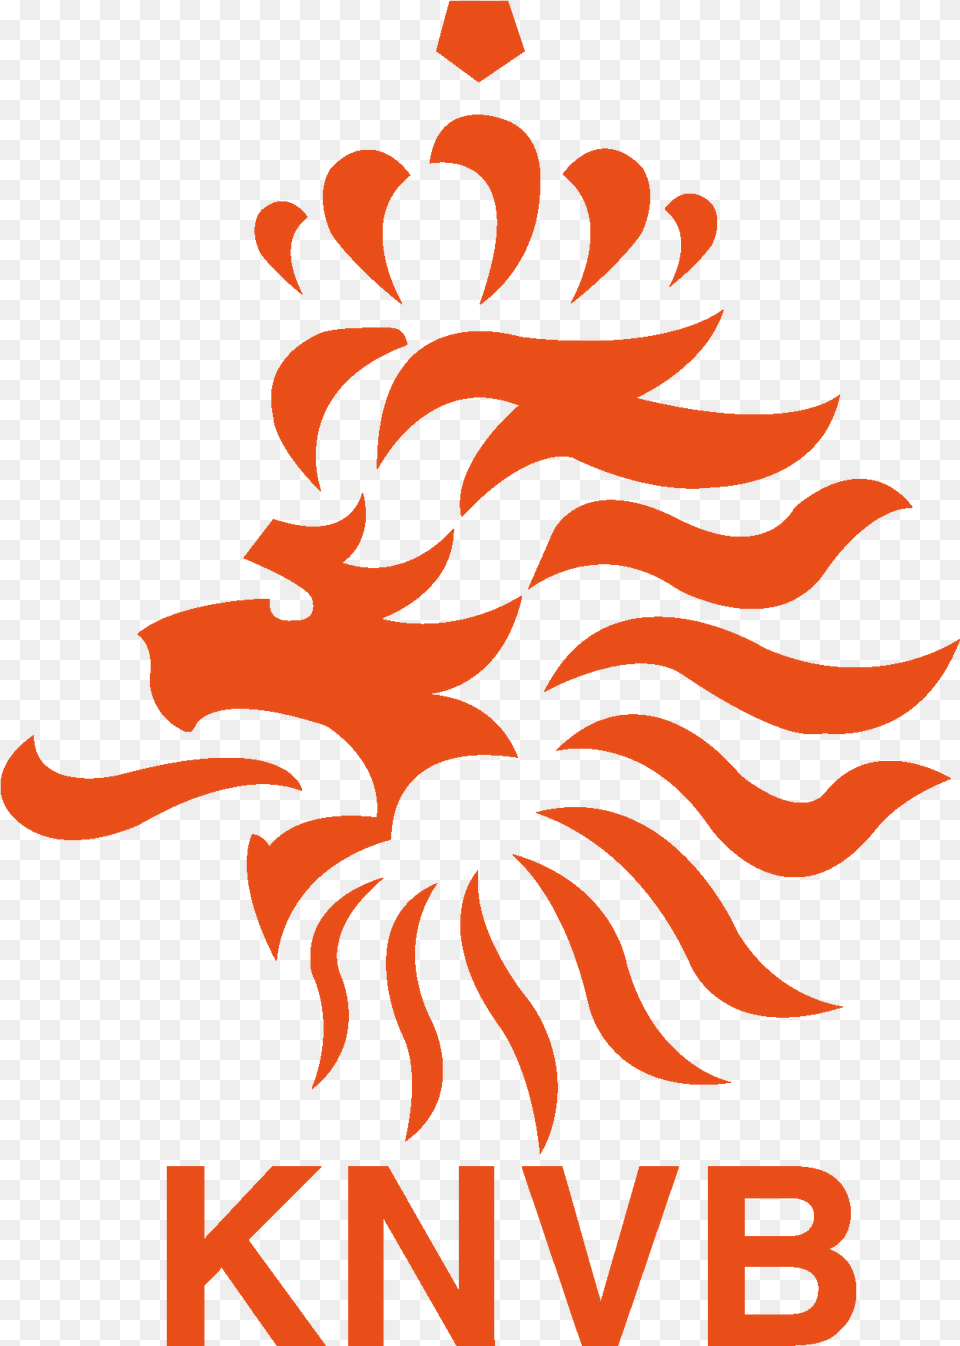 Knvb Logo Royal Netherlands Football Association Escudo De Holanda Futbol, Fire, Flame, Dynamite, Weapon Png Image